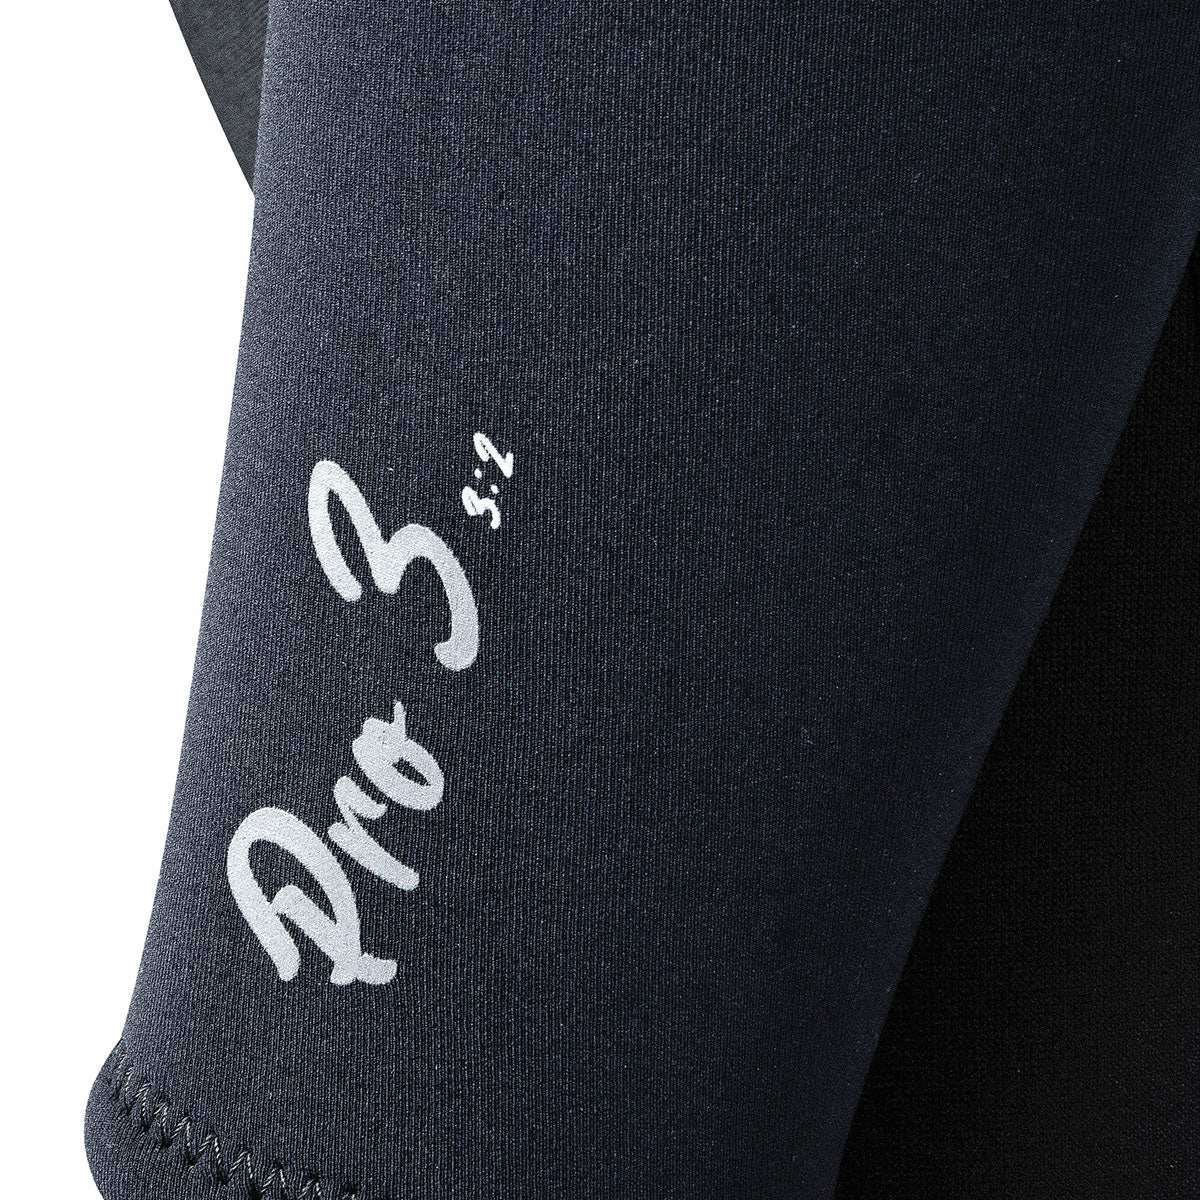 Body Glove Women's Pro 3 Back Zip Fullsuit 3/2mm